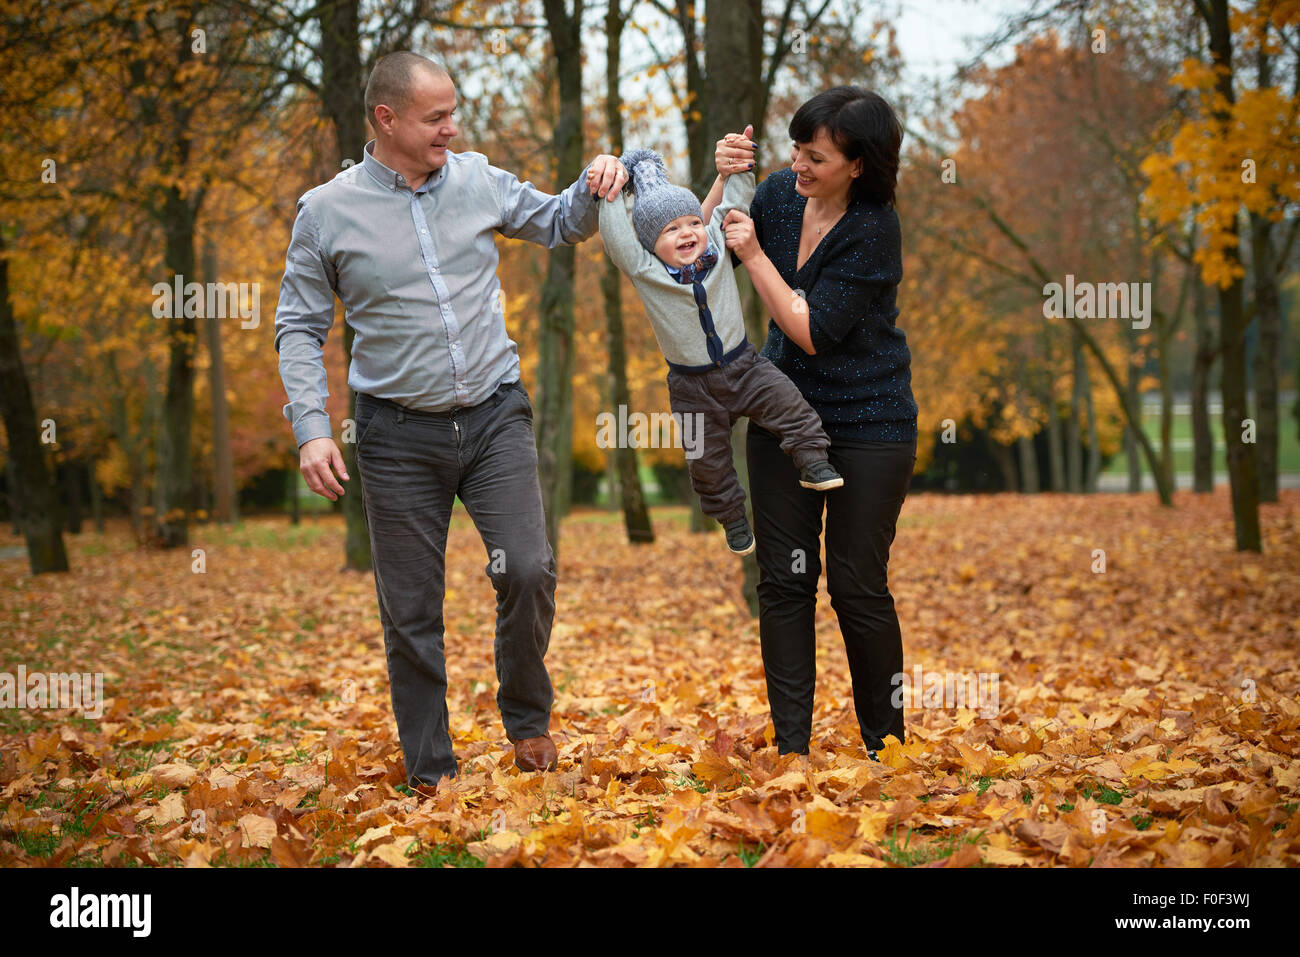 happy family in autumn park Stock Photo